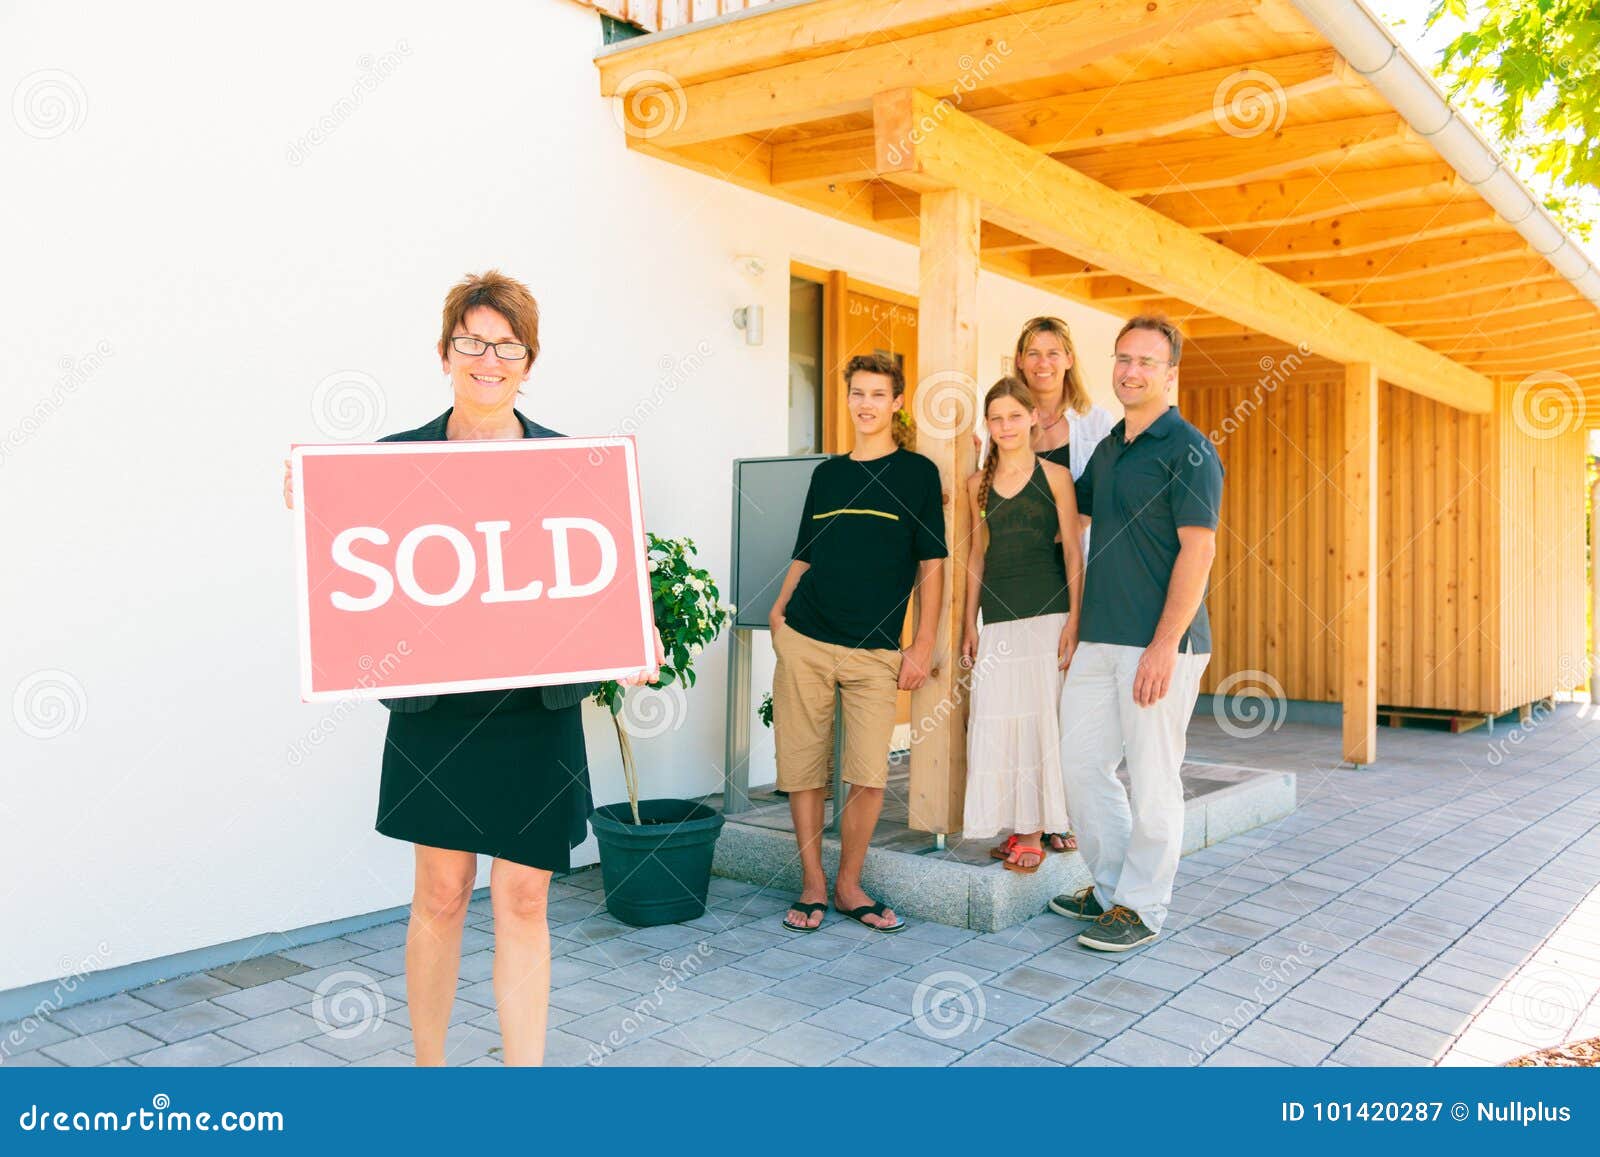 realtor selling a house